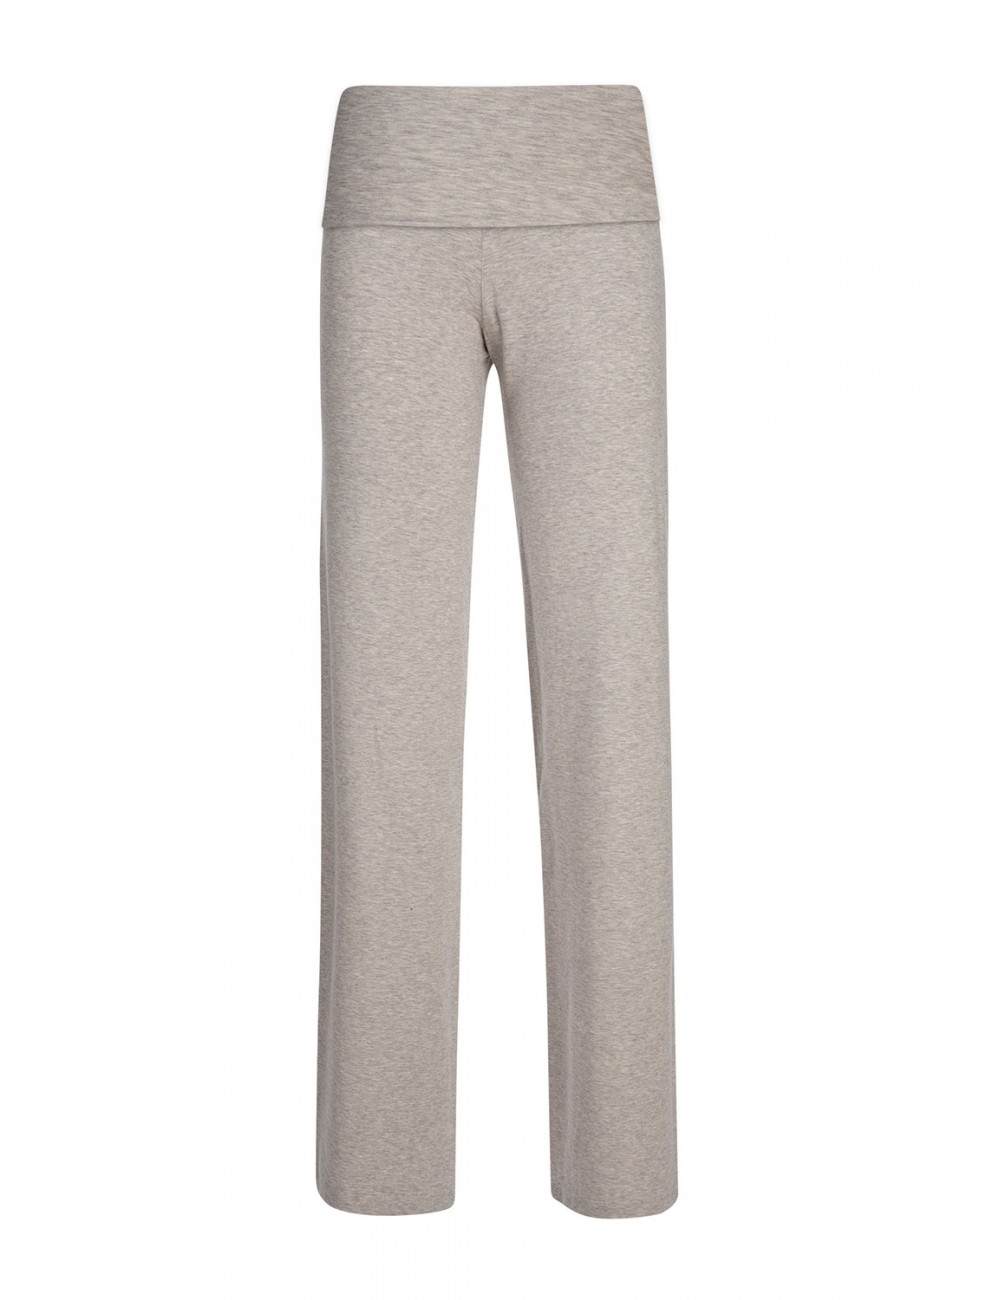 Loungewear Pants - Organic Cotton - Nourishing - The Back Label the  Wellnesswear